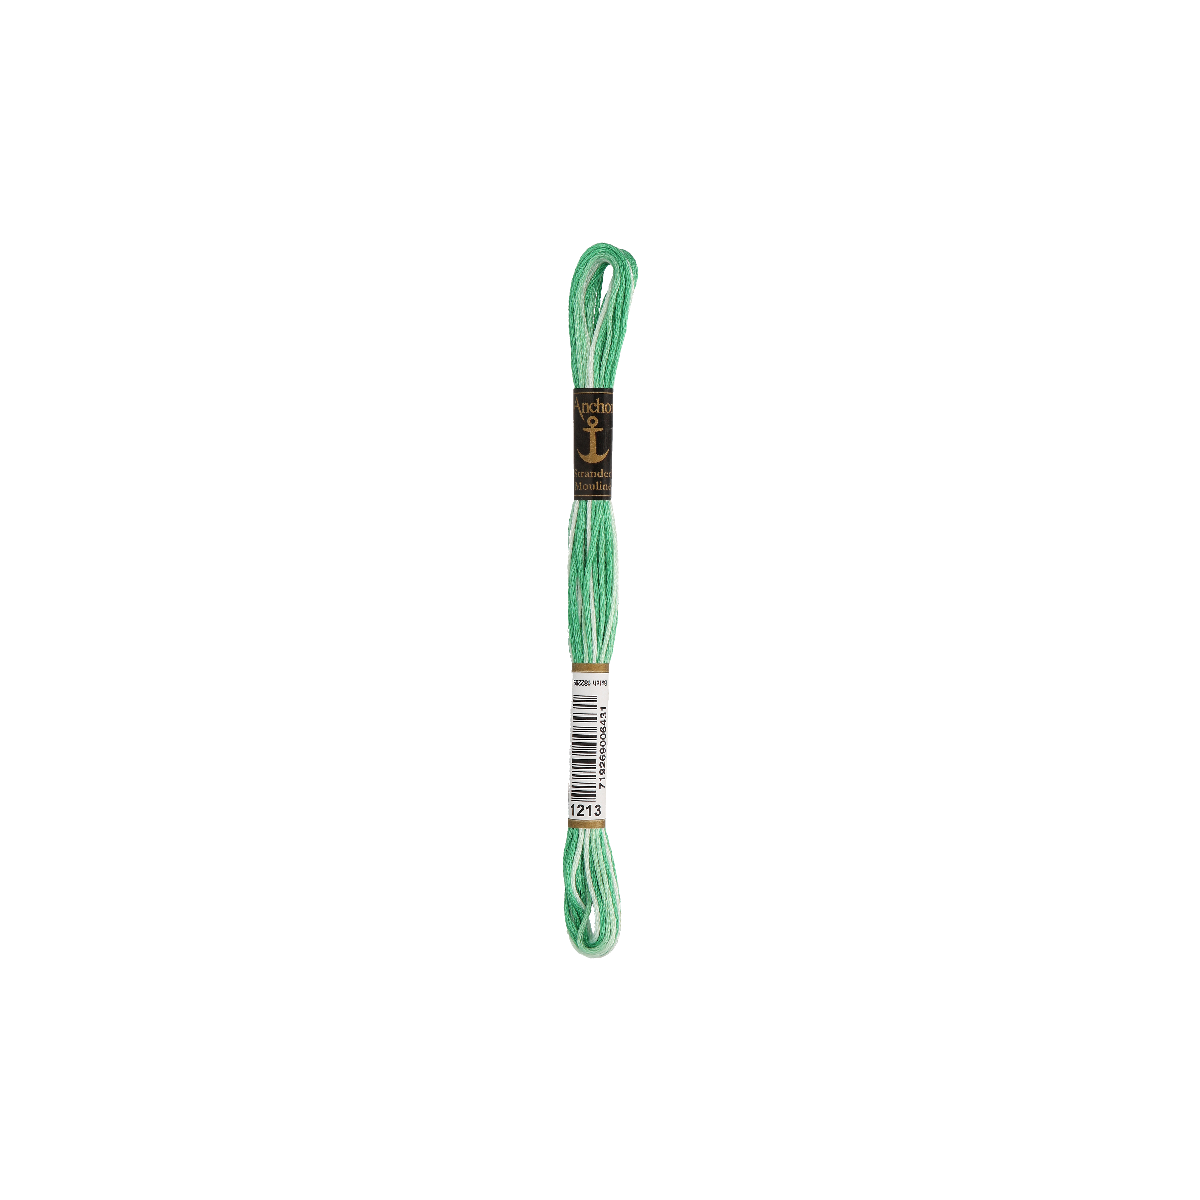 Anchor Sticktwist 8m, groene omber, katoen, kleur 1213,...